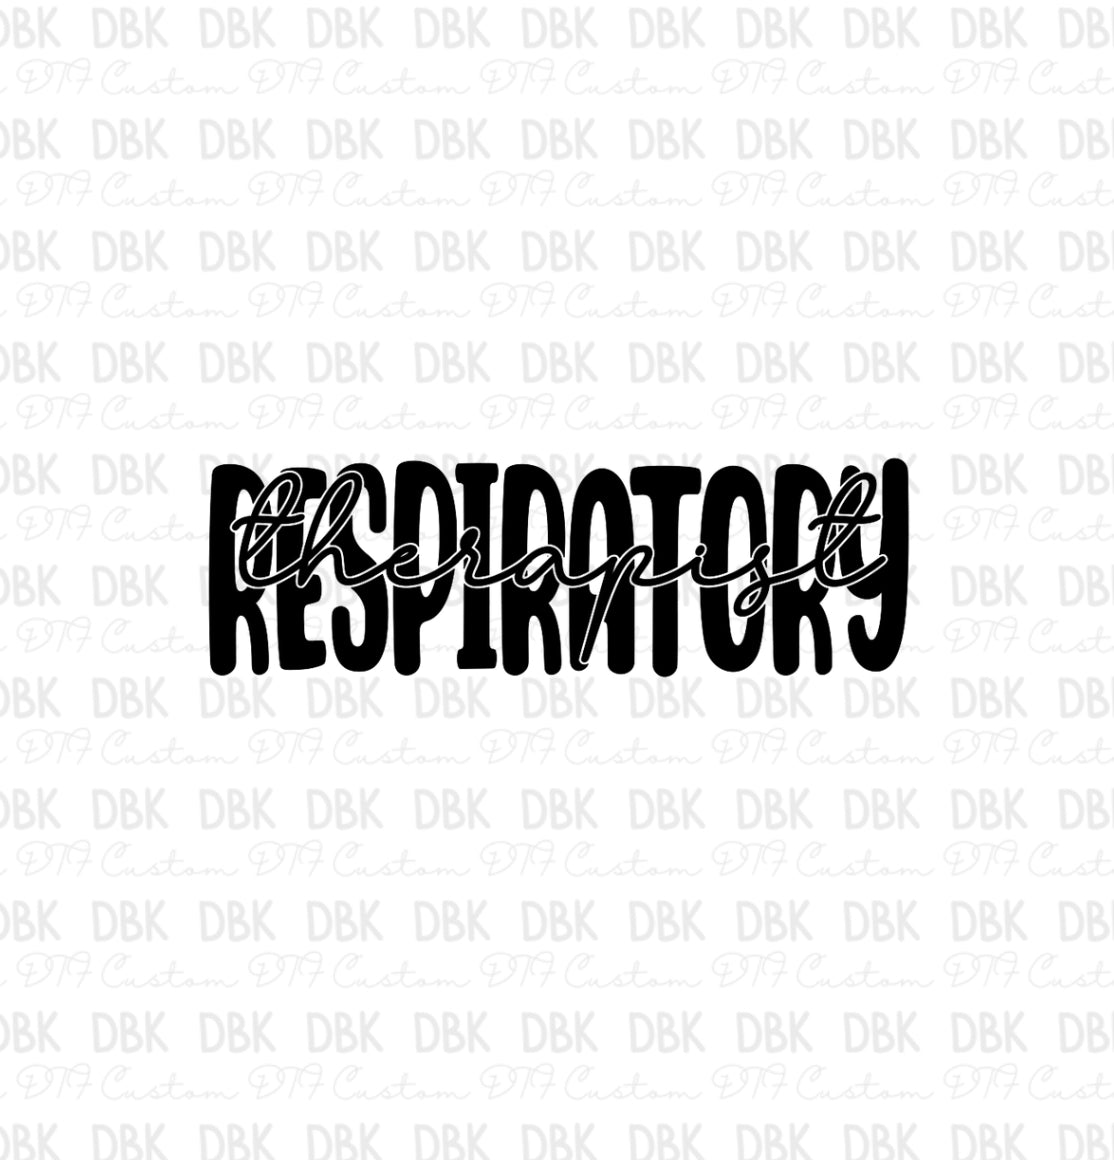 Respiratory Therapist DTF transfer